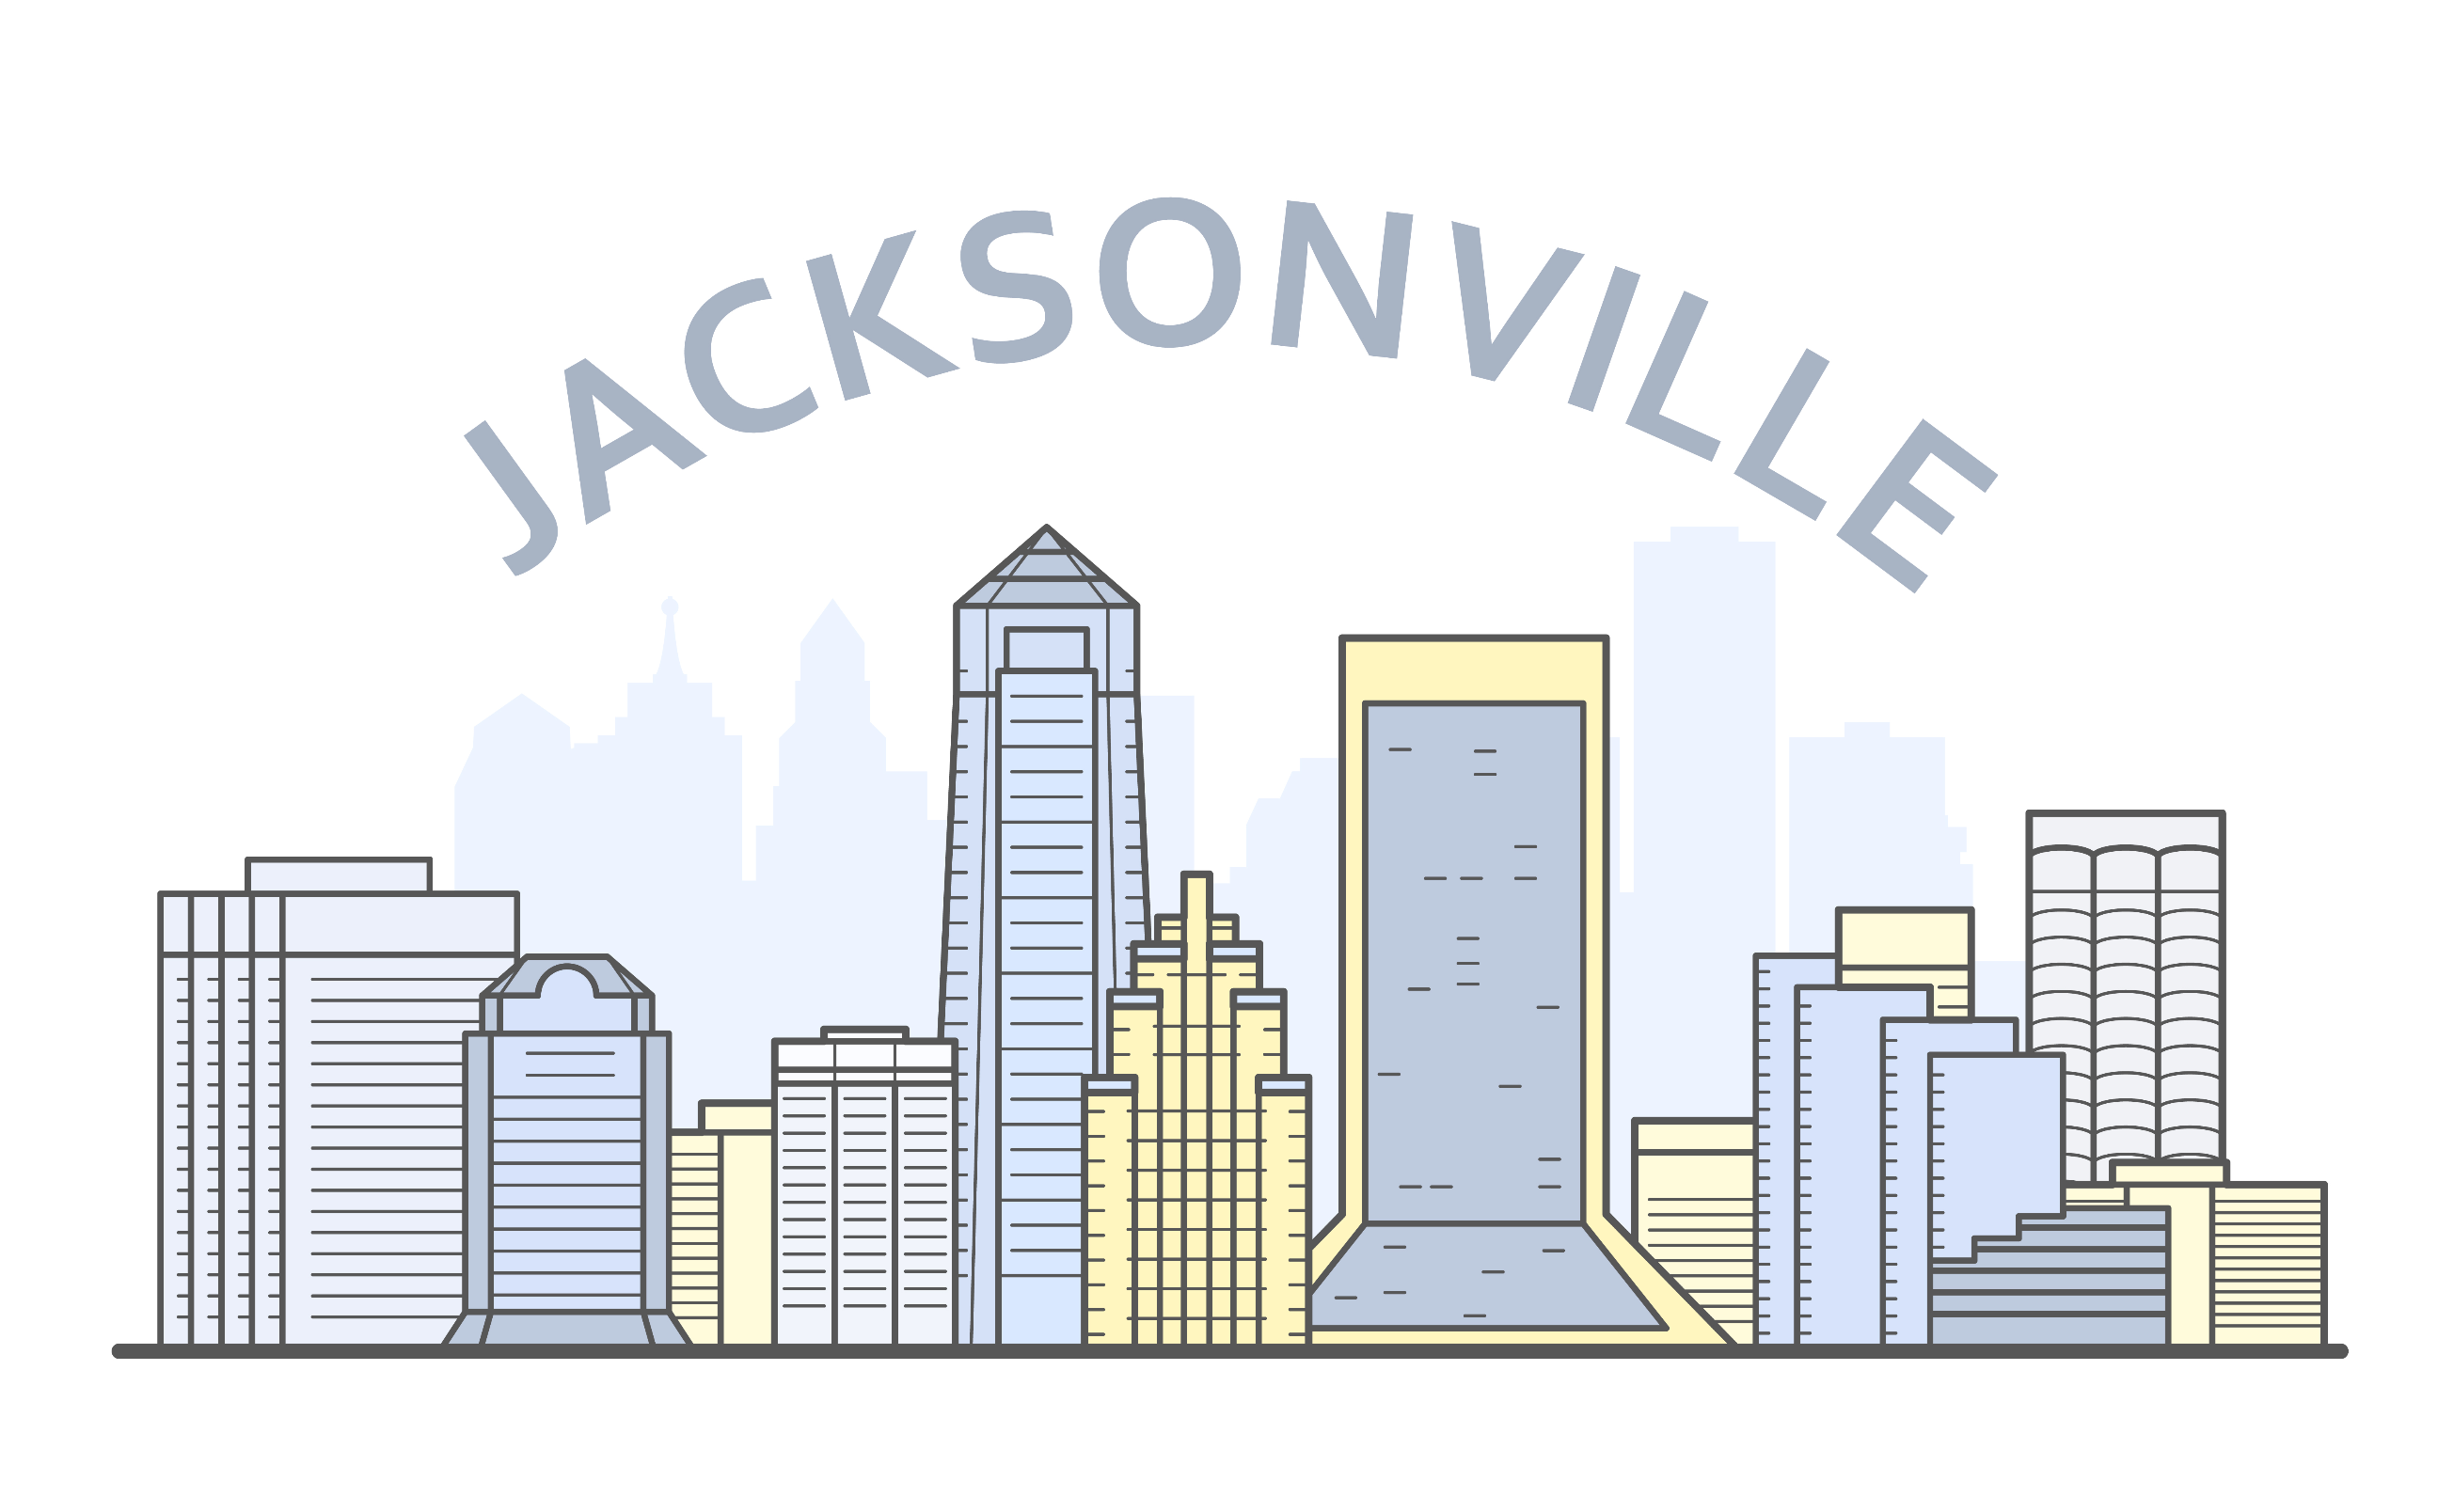 Jacksonville, Florida skyline overlooking the St. Johns River.